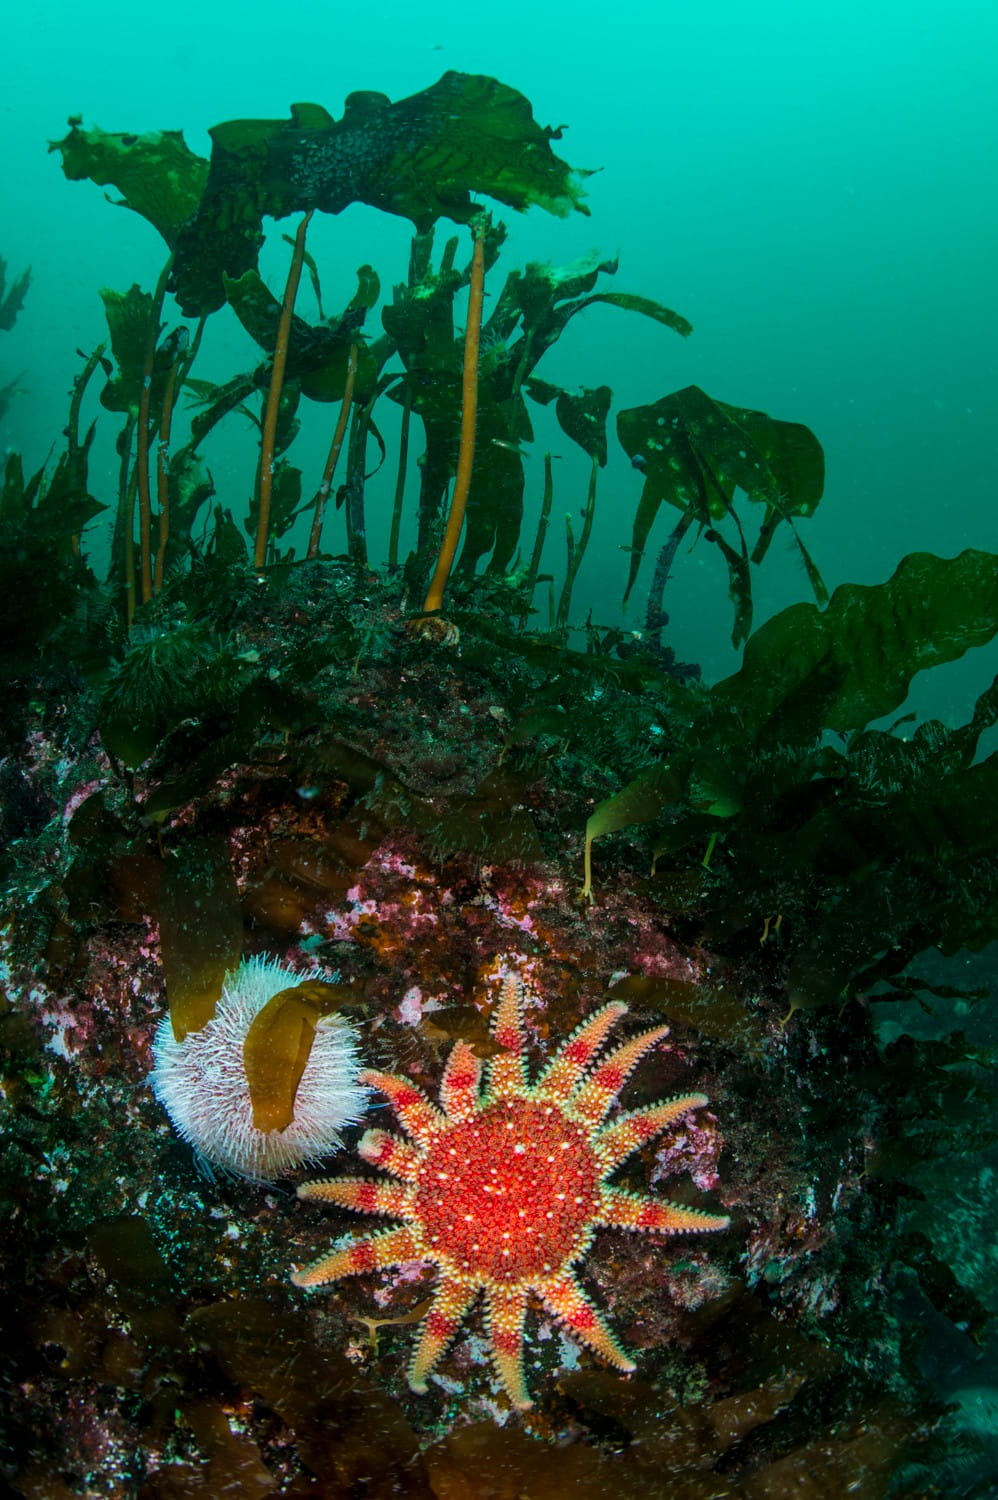 Common sunstar <em>(Crossaster papposus)</em> and an edible sea urchin <em>(Echinus esculentus)</em> on a rocky outcrop